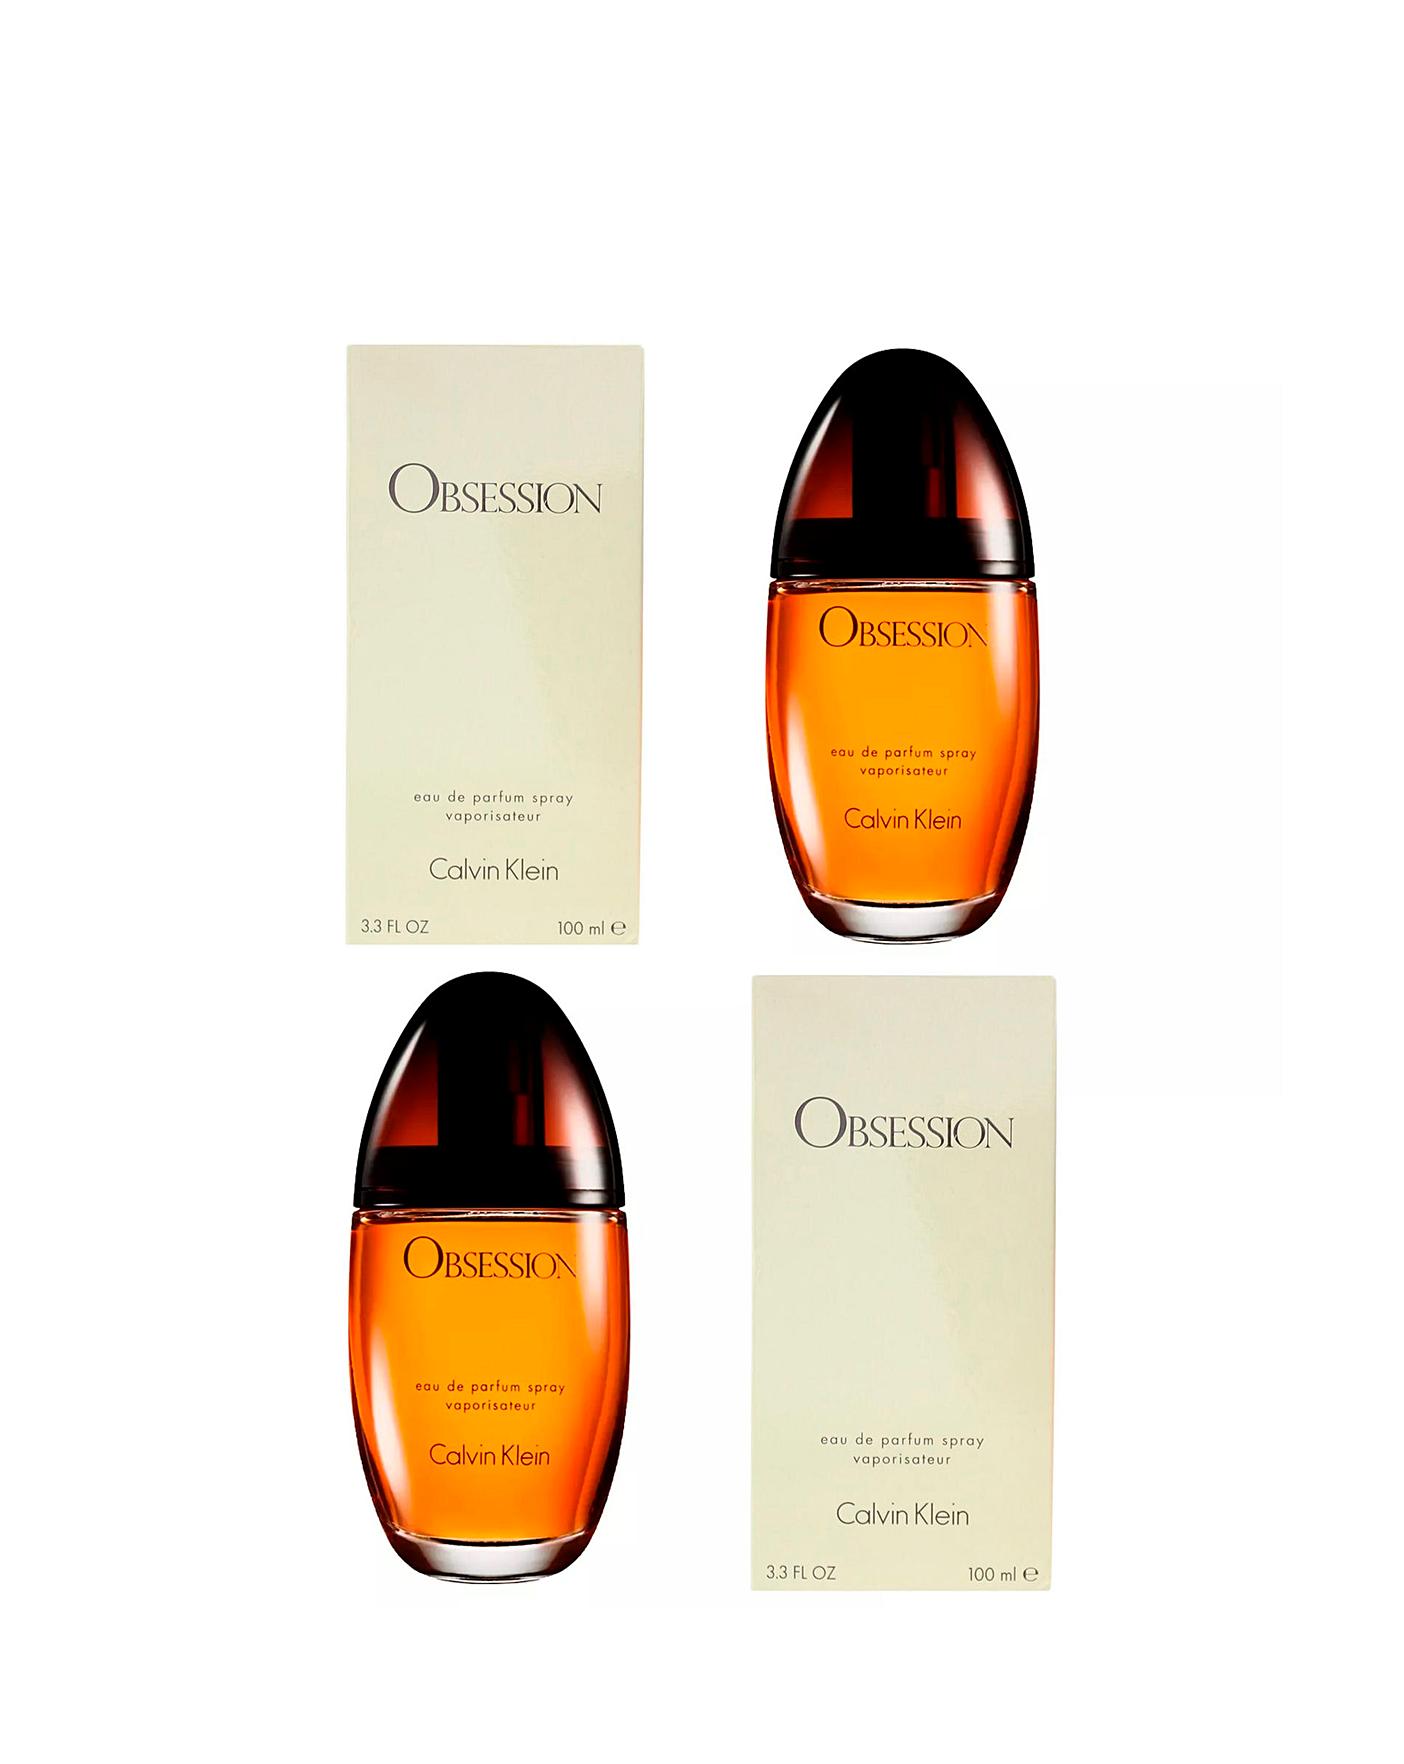 Calvin Klein Obsession Eau de Parfum, Perfume for Women, 3.4 oz 